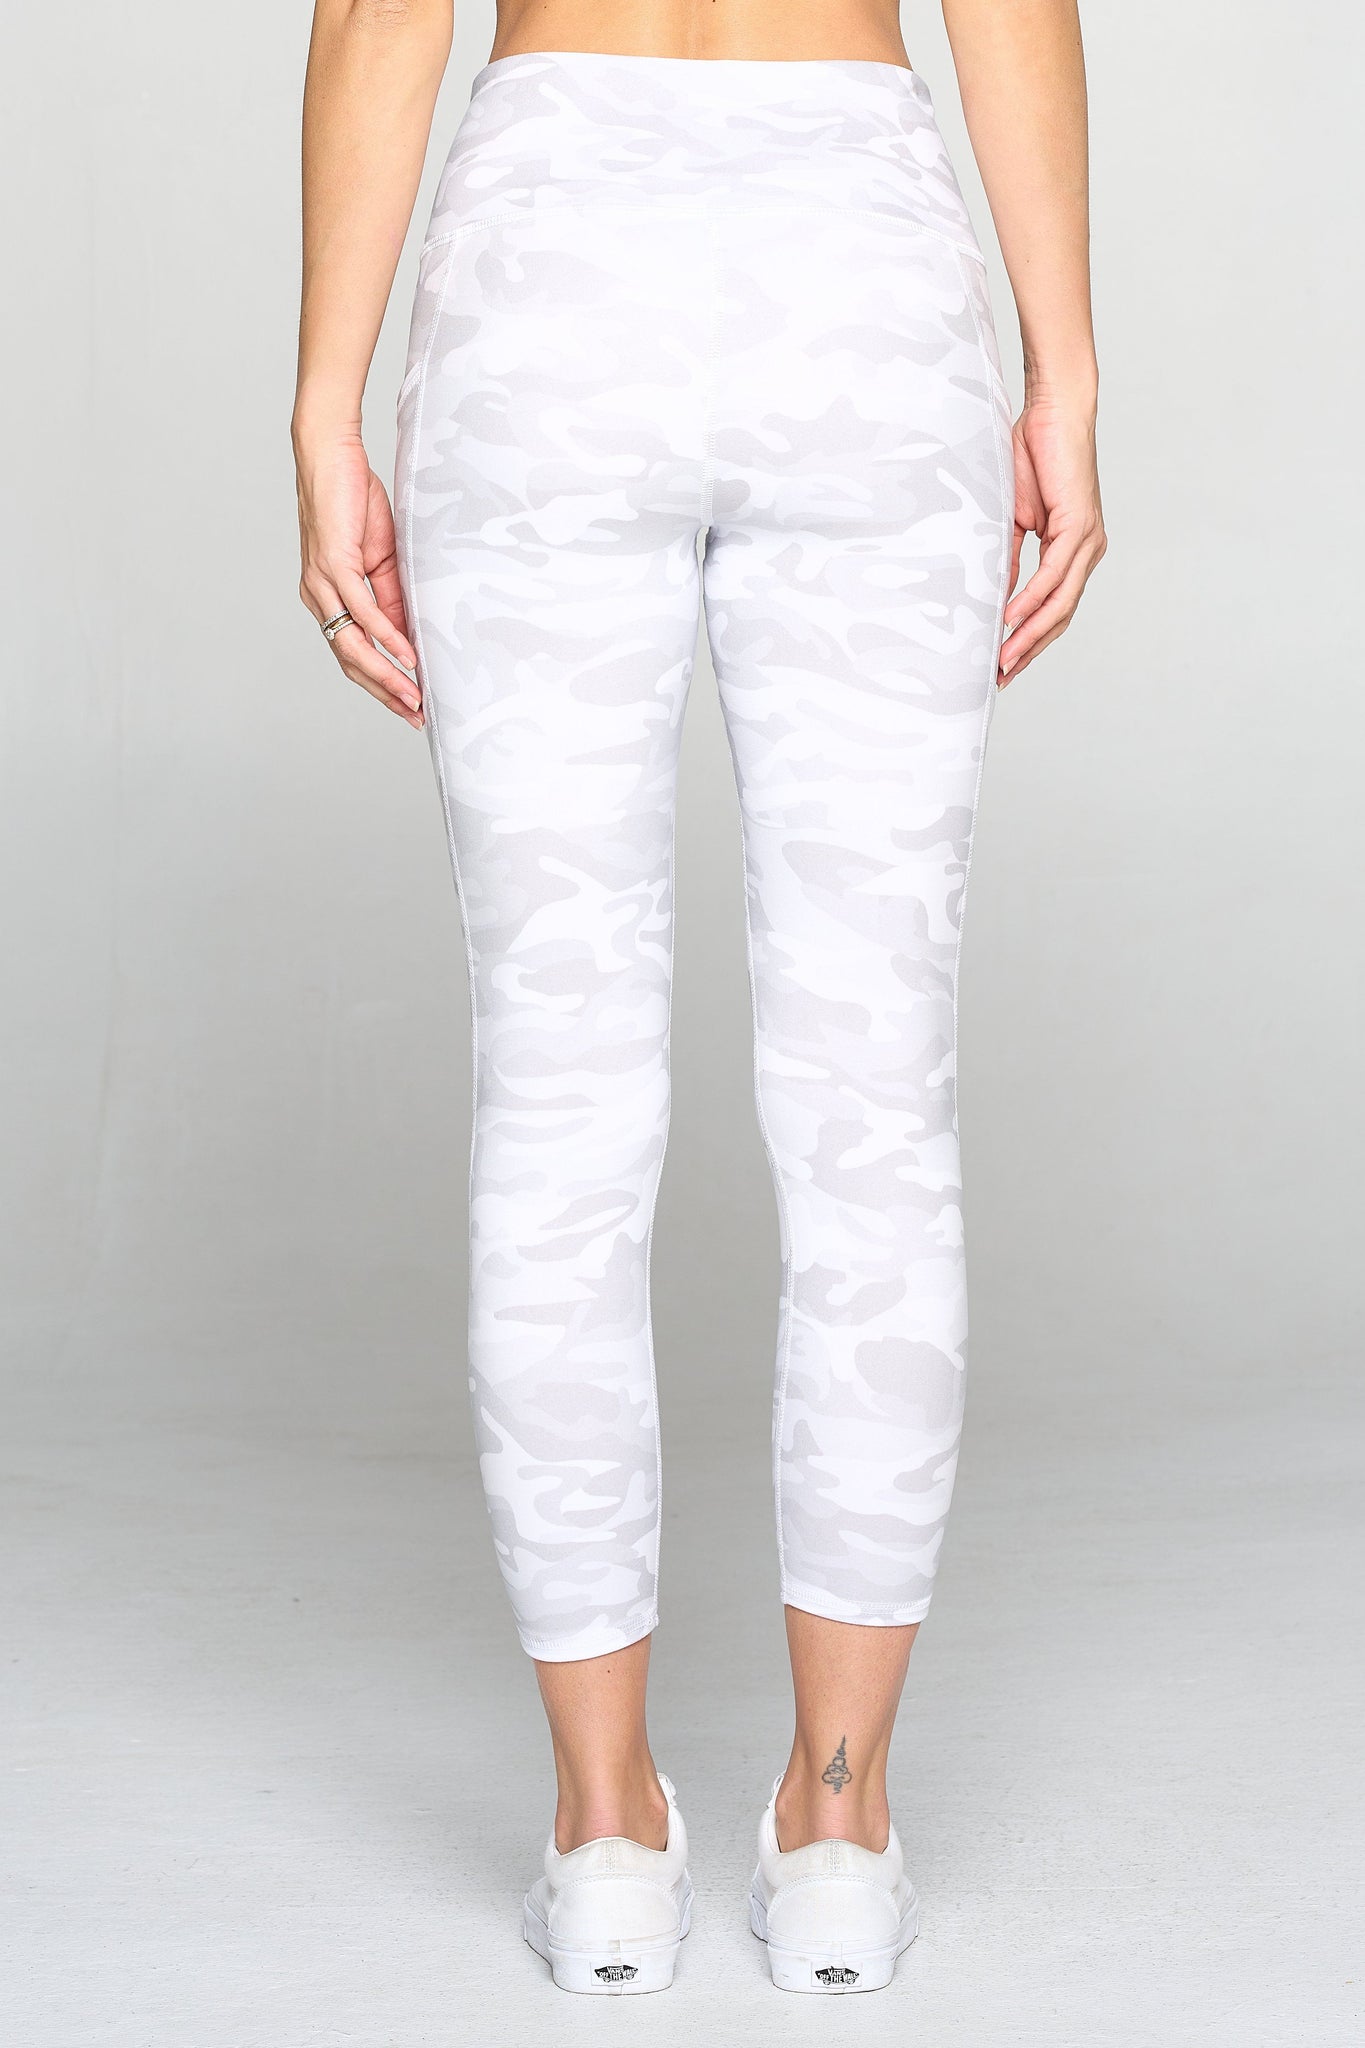 Liz - Grey White Camo w Pockets 7/8 Legging - FINAL SALE